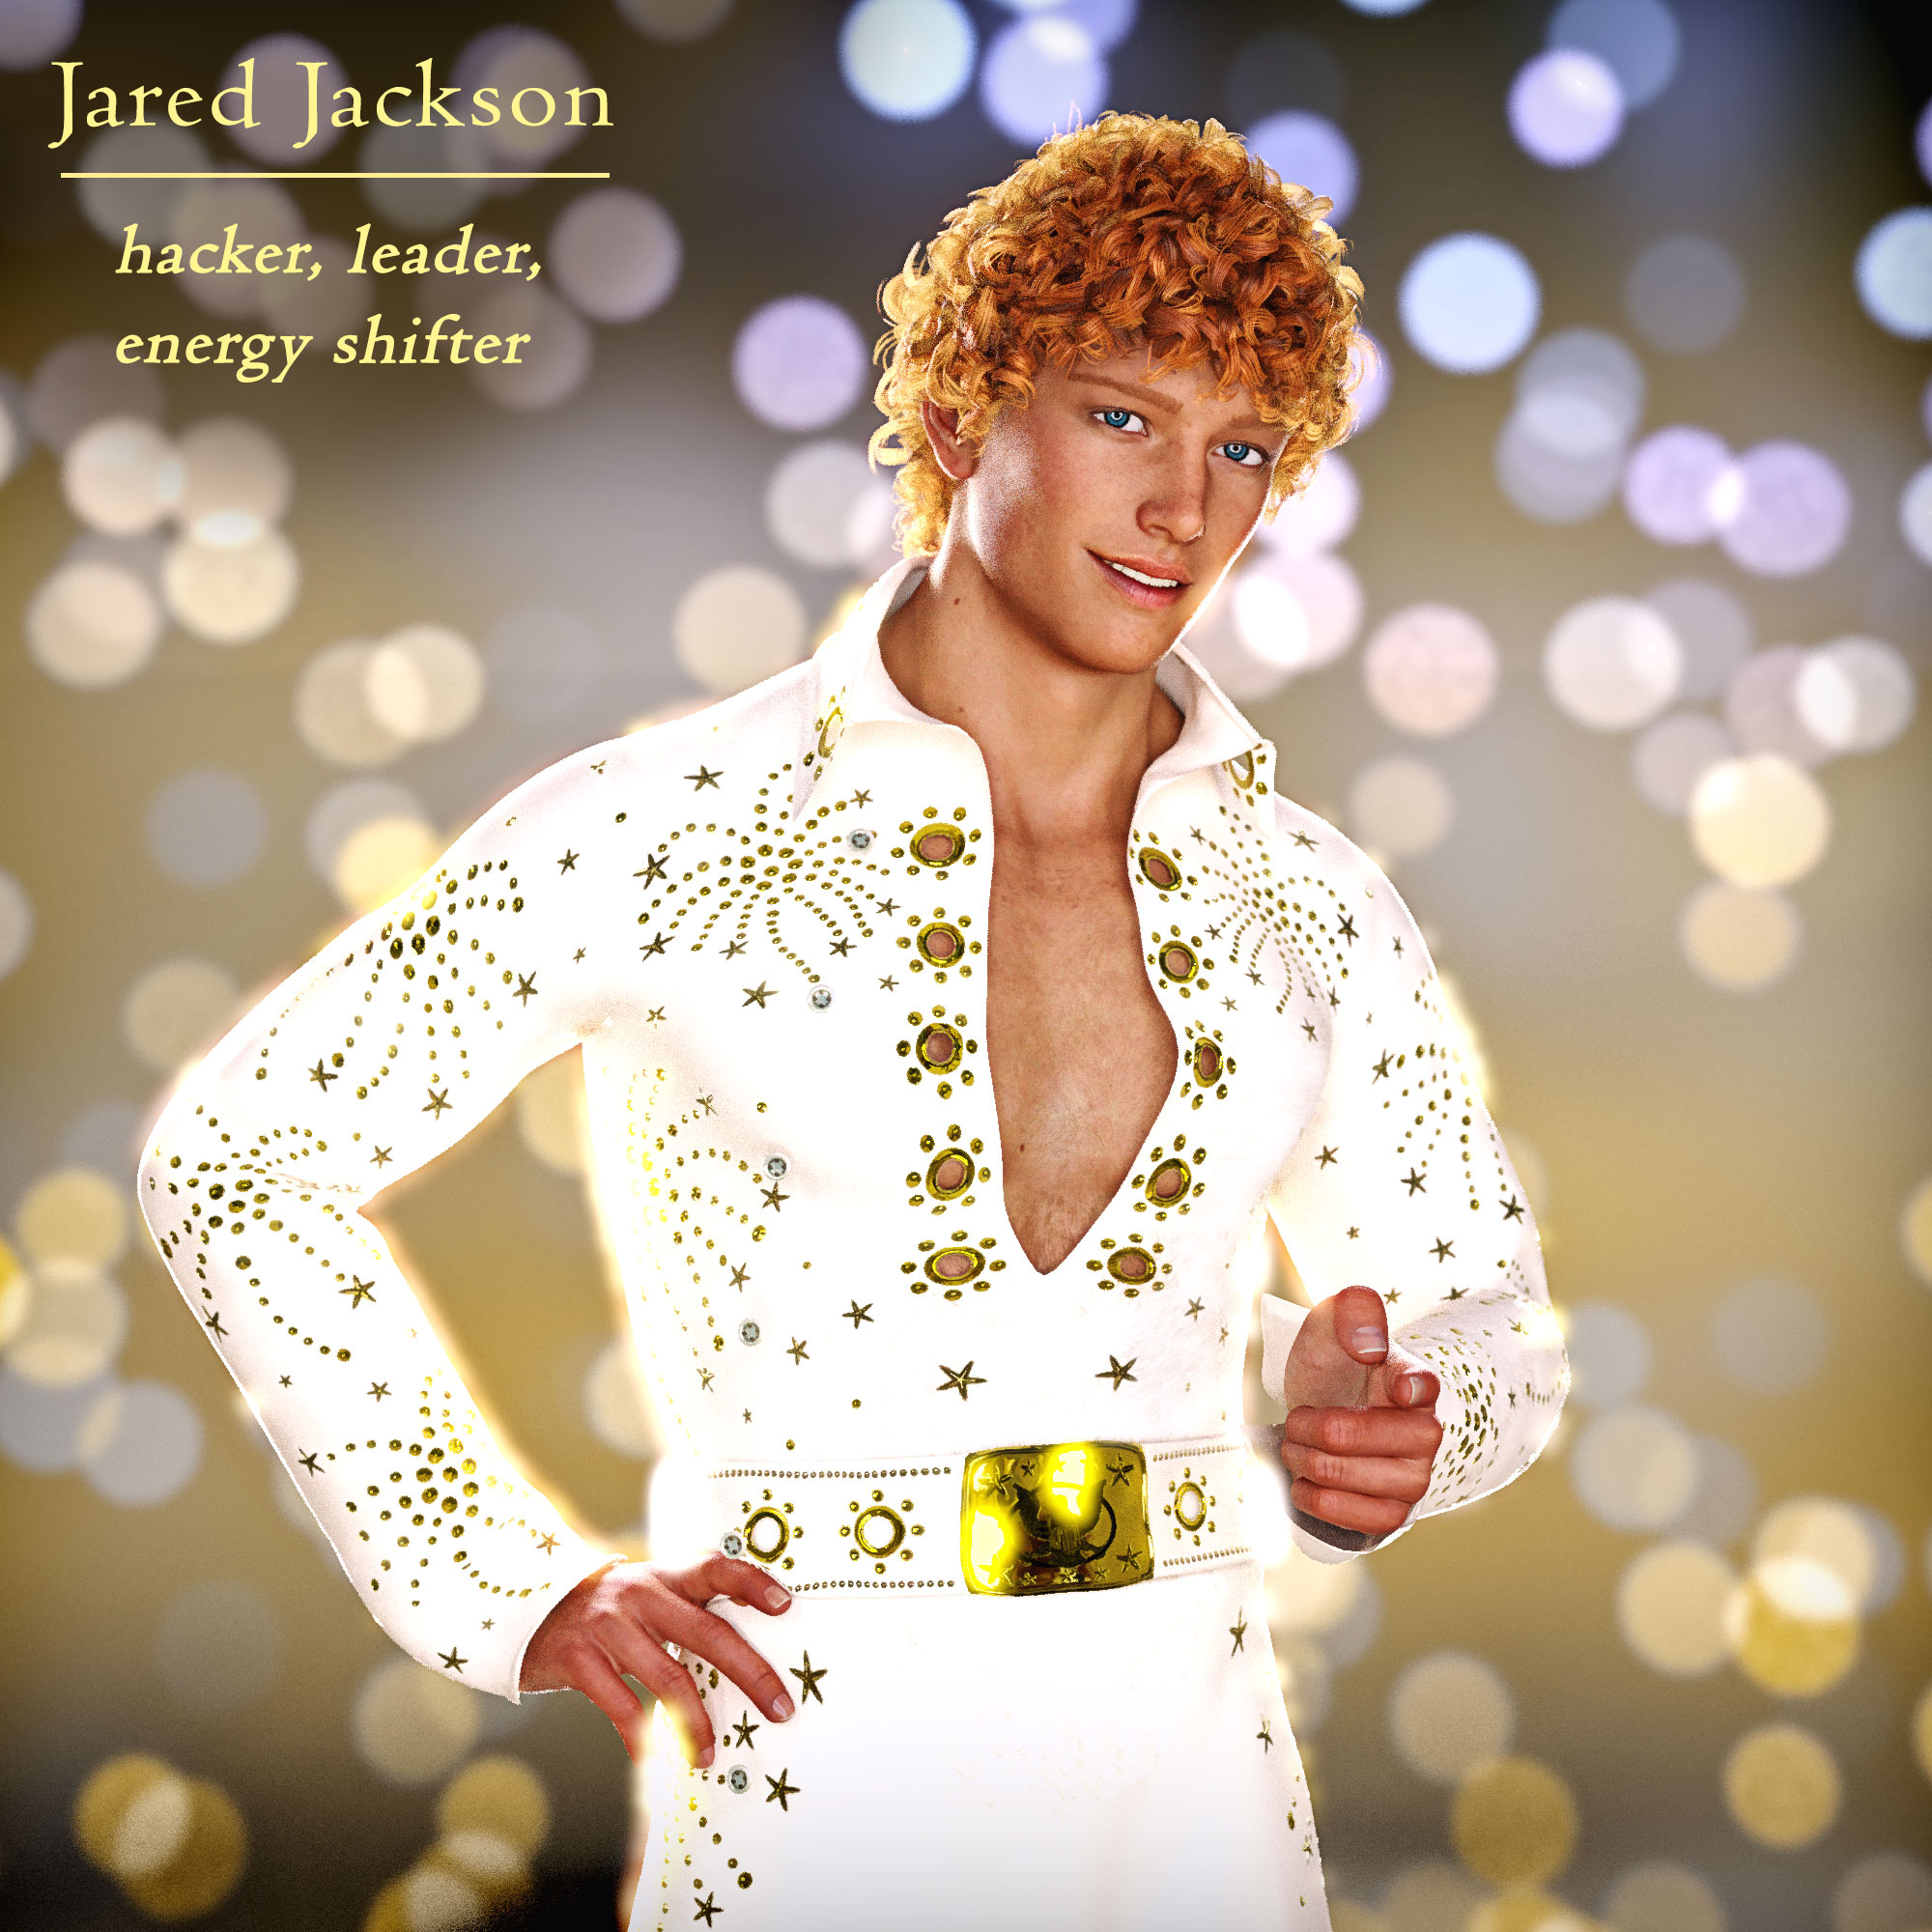 Meet the Supers: Jared Jackson